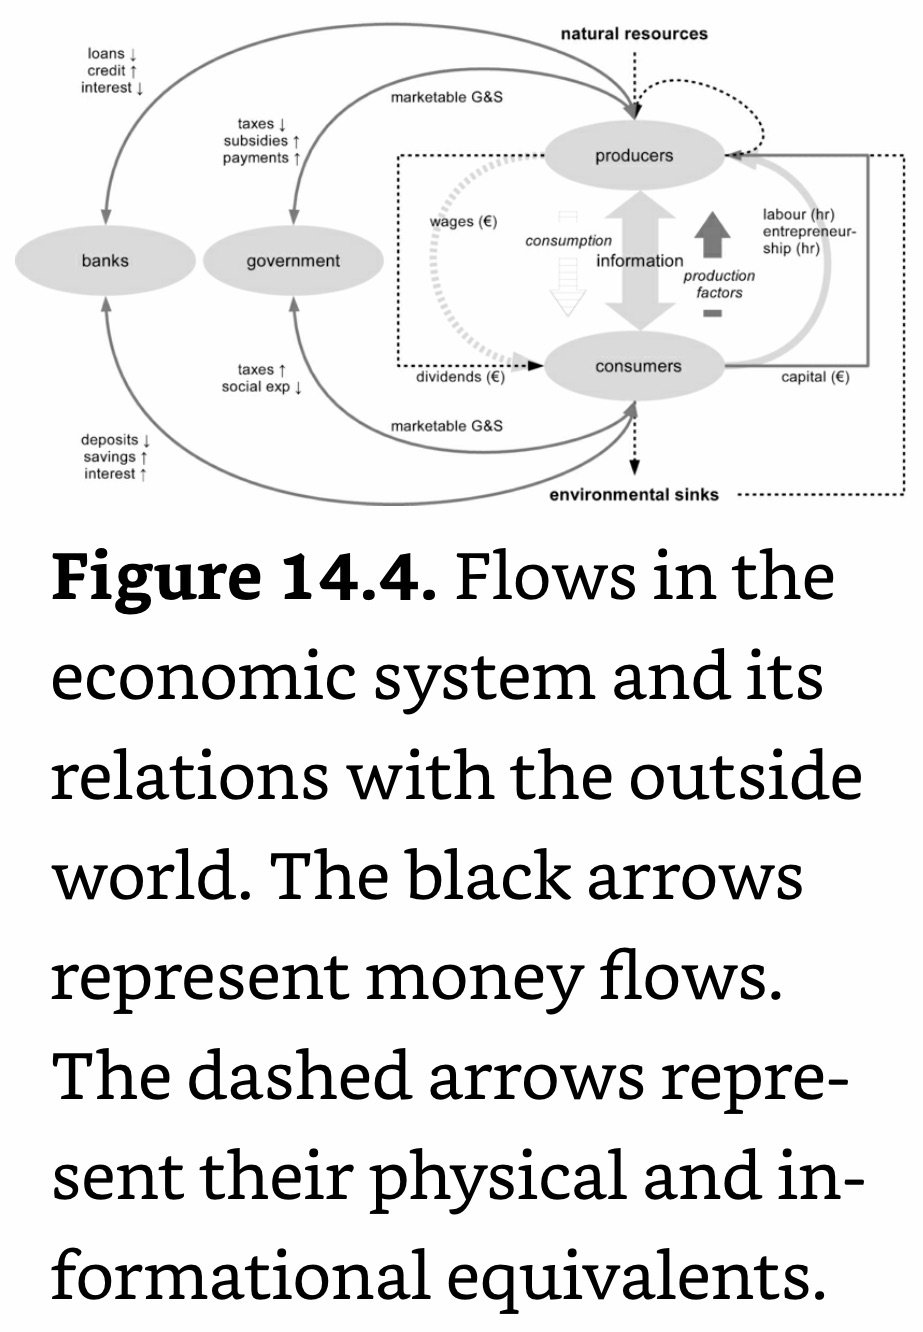 Economic System Flows.jpeg